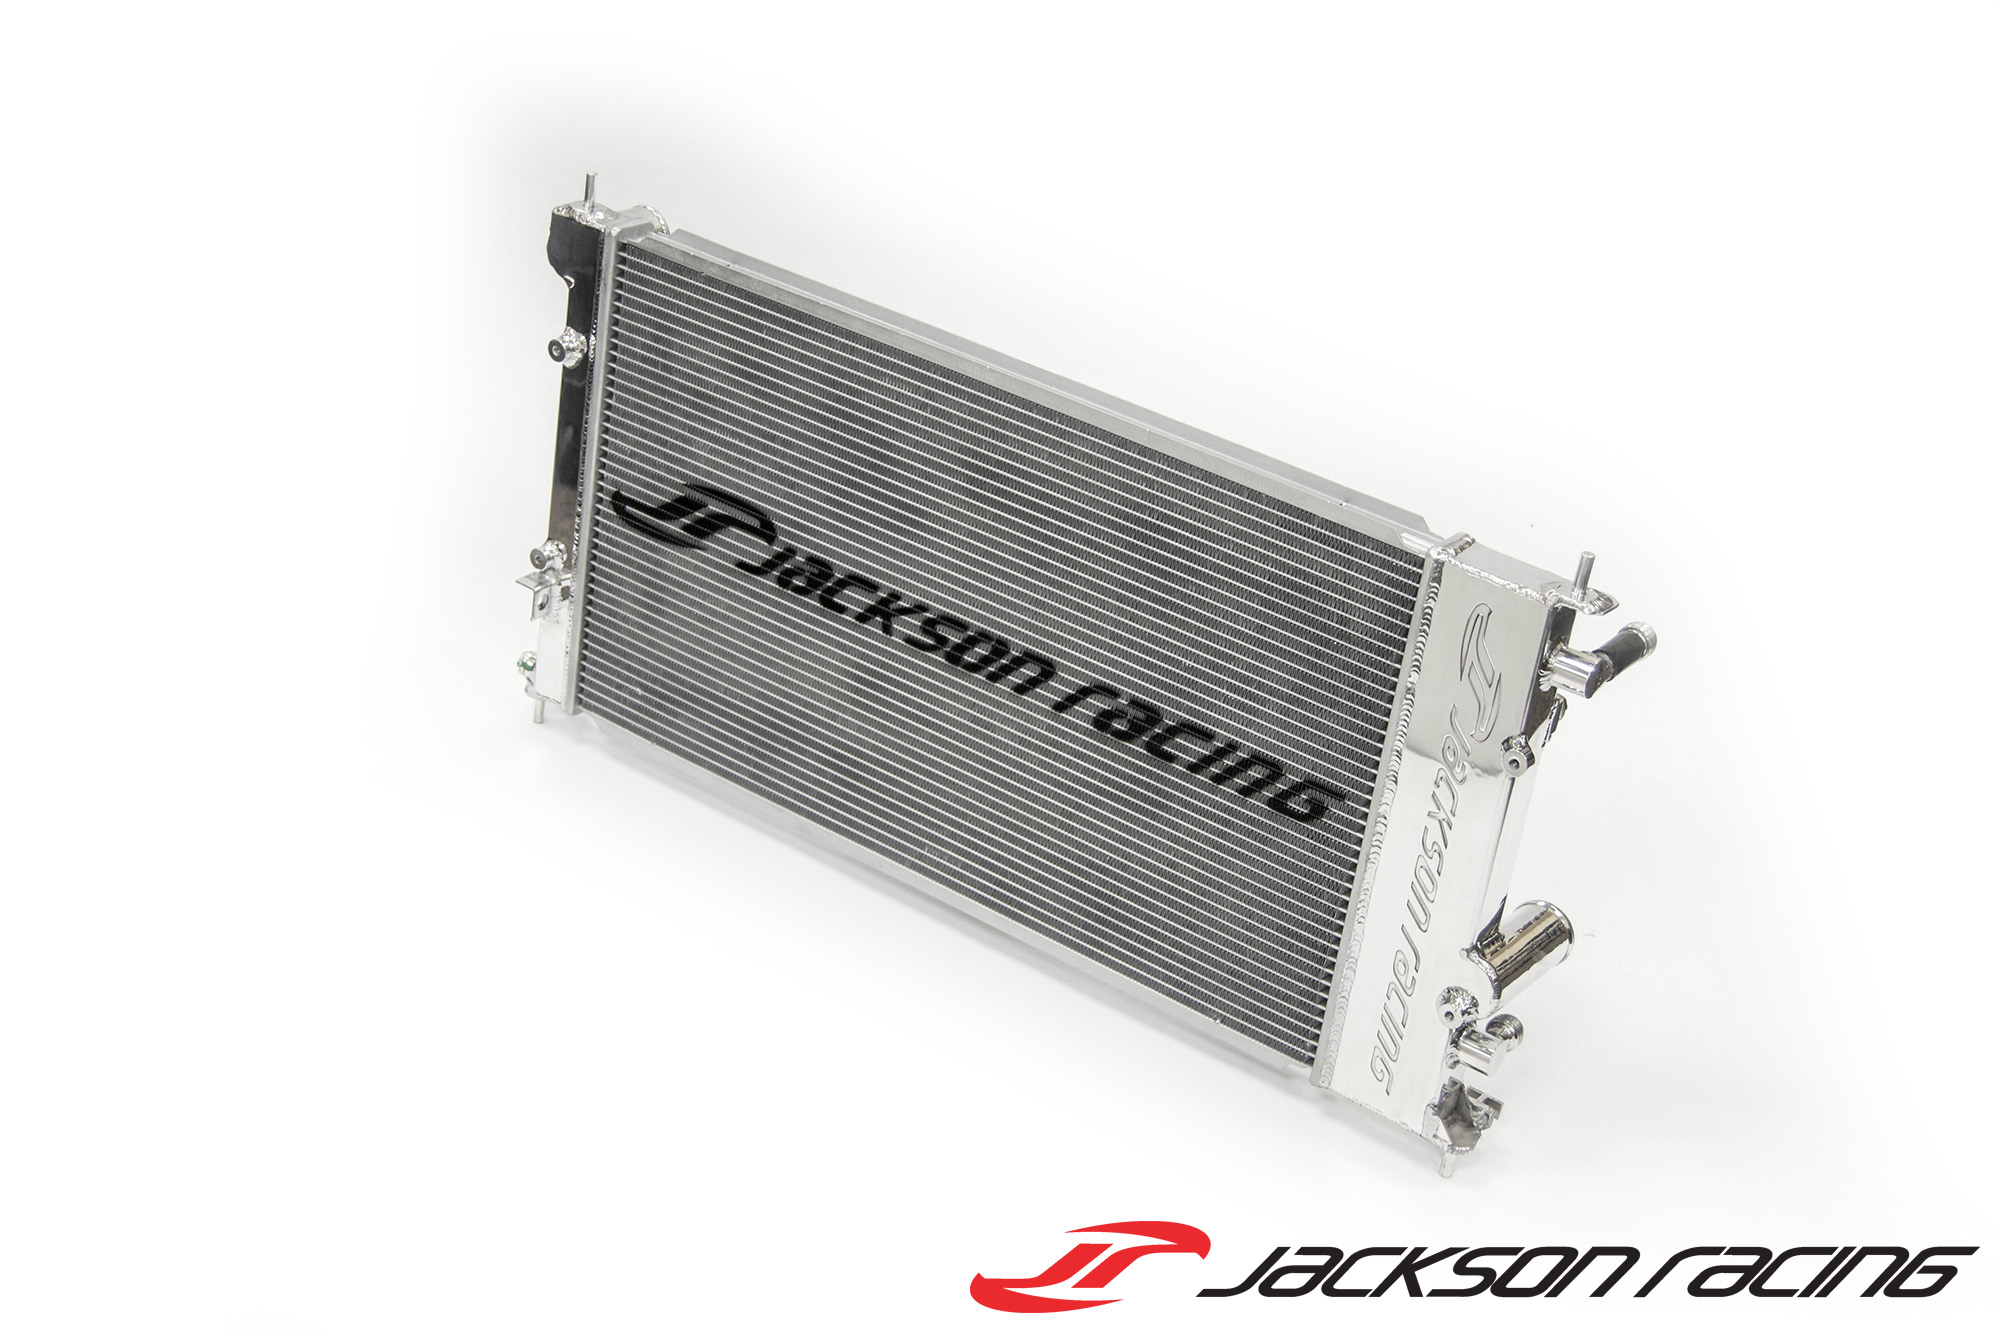 Jackson Racing Utilizes A 31mm CSF Racing Radiator Core